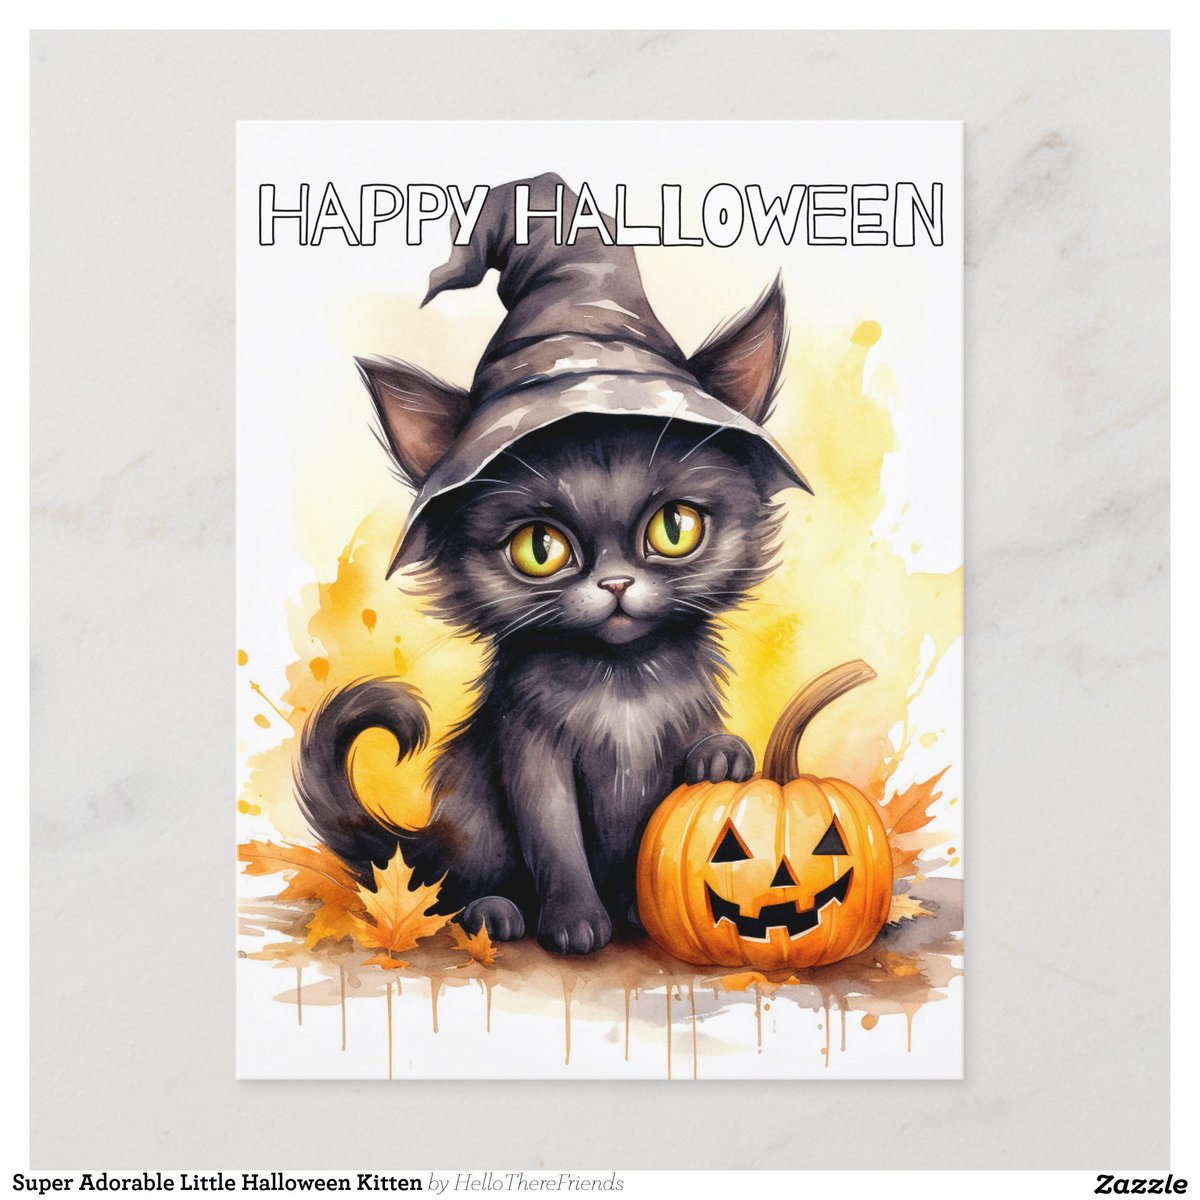 Super Adorable Little Halloween Kitten Postcard→zazzle.com/z/akw0dvjk?rf=…

#Postcards #Hello #Stationery #HappyHalloween #Halloween #Pumpkins #Halloween2024 #TrickOrTreat #Cats #Caturday #Kittens #Zazzle